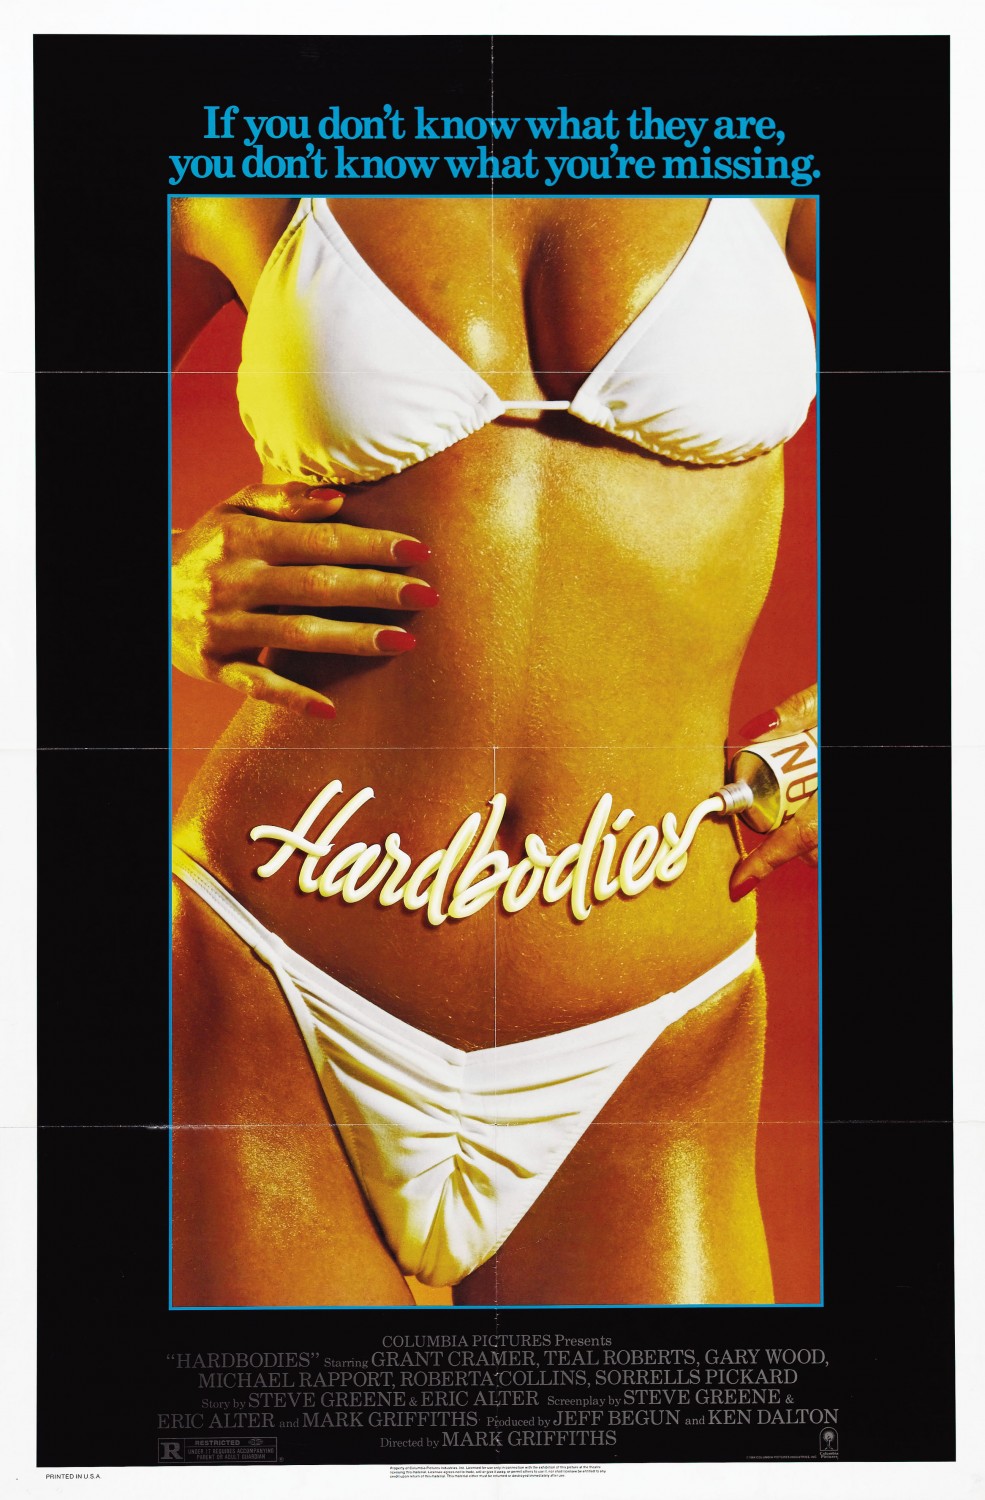 Extra Large Movie Poster Image for Hardbodies 